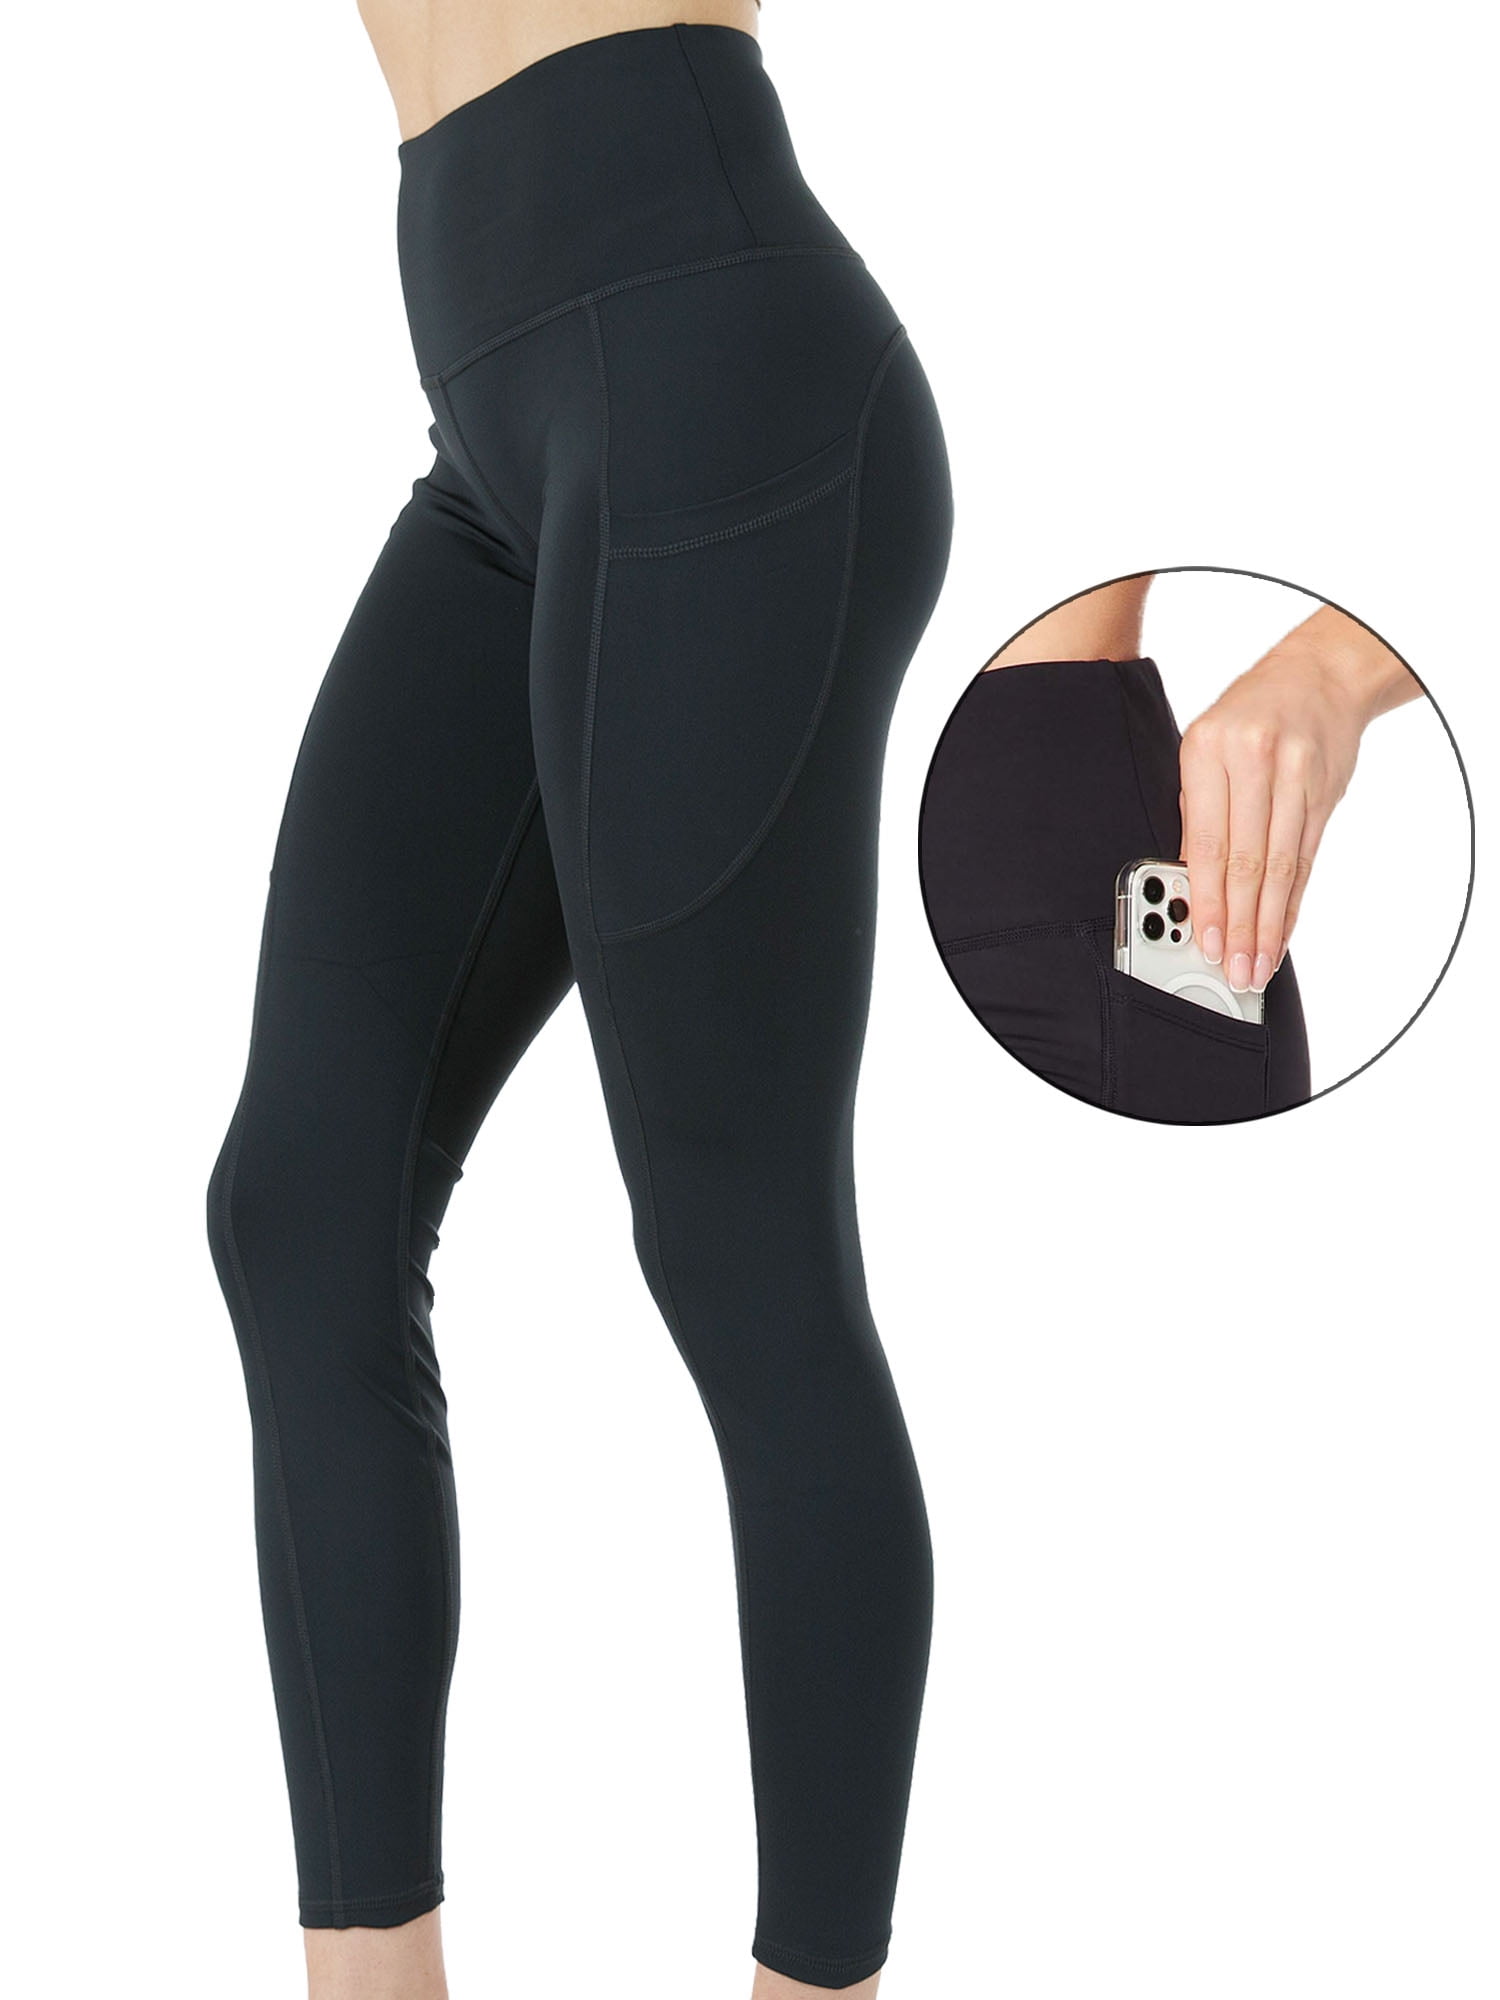 kpoplk Boot Cut Yoga Pants Women,Leggings with Pockets for Women